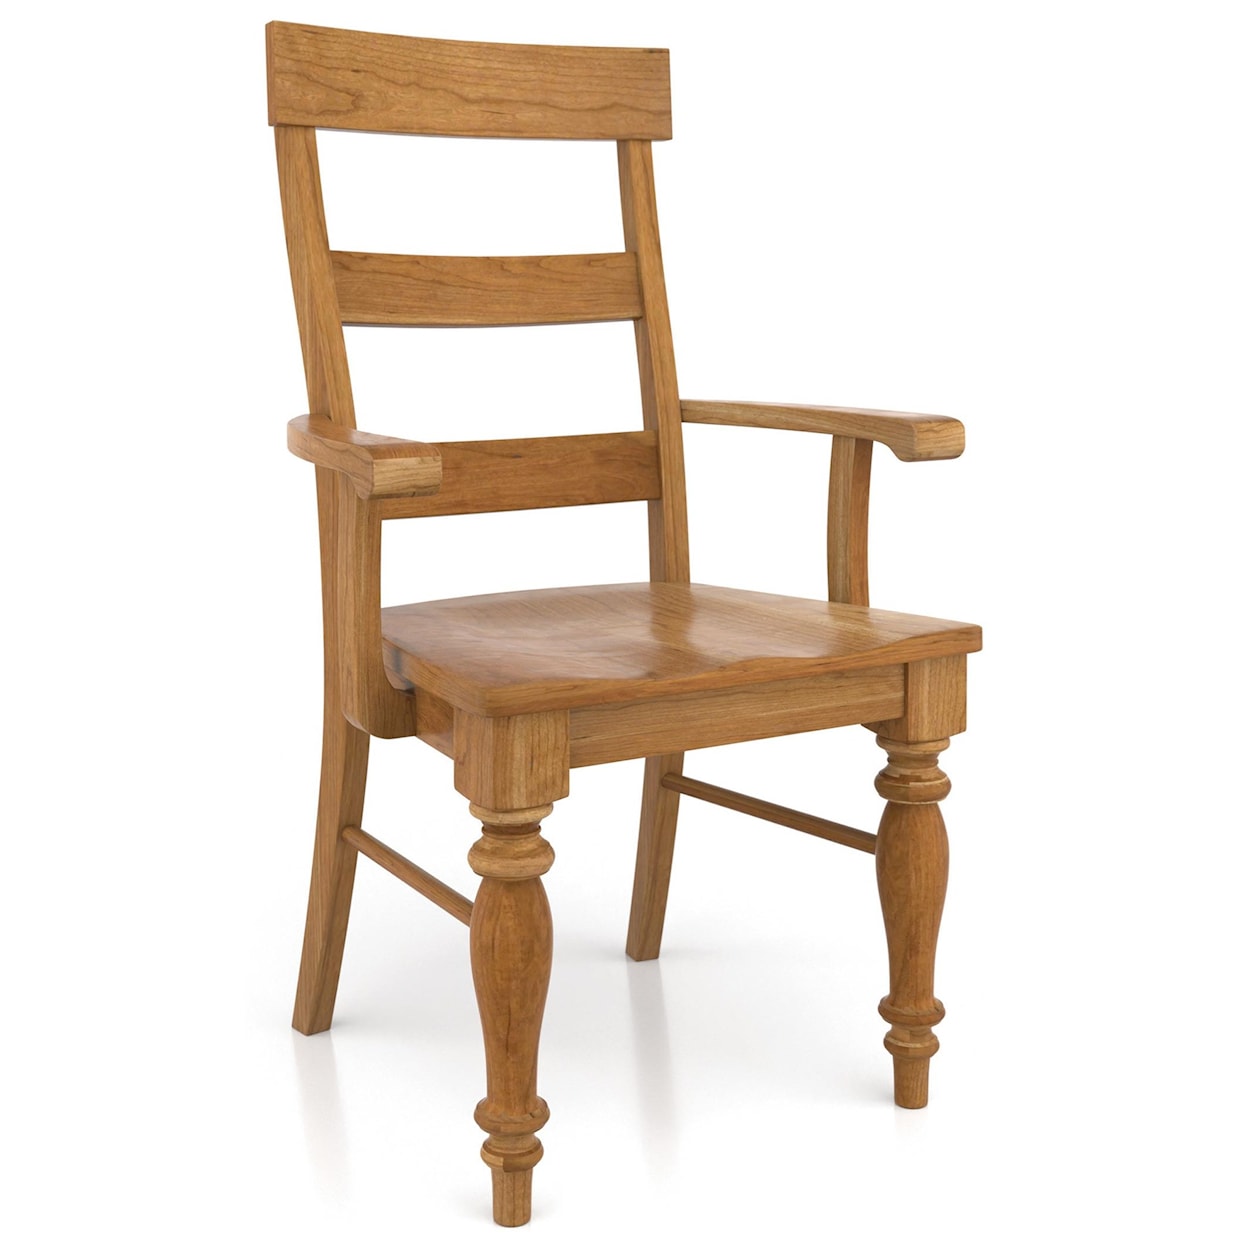 Wengerd Wood Products Savanna Arm Chair